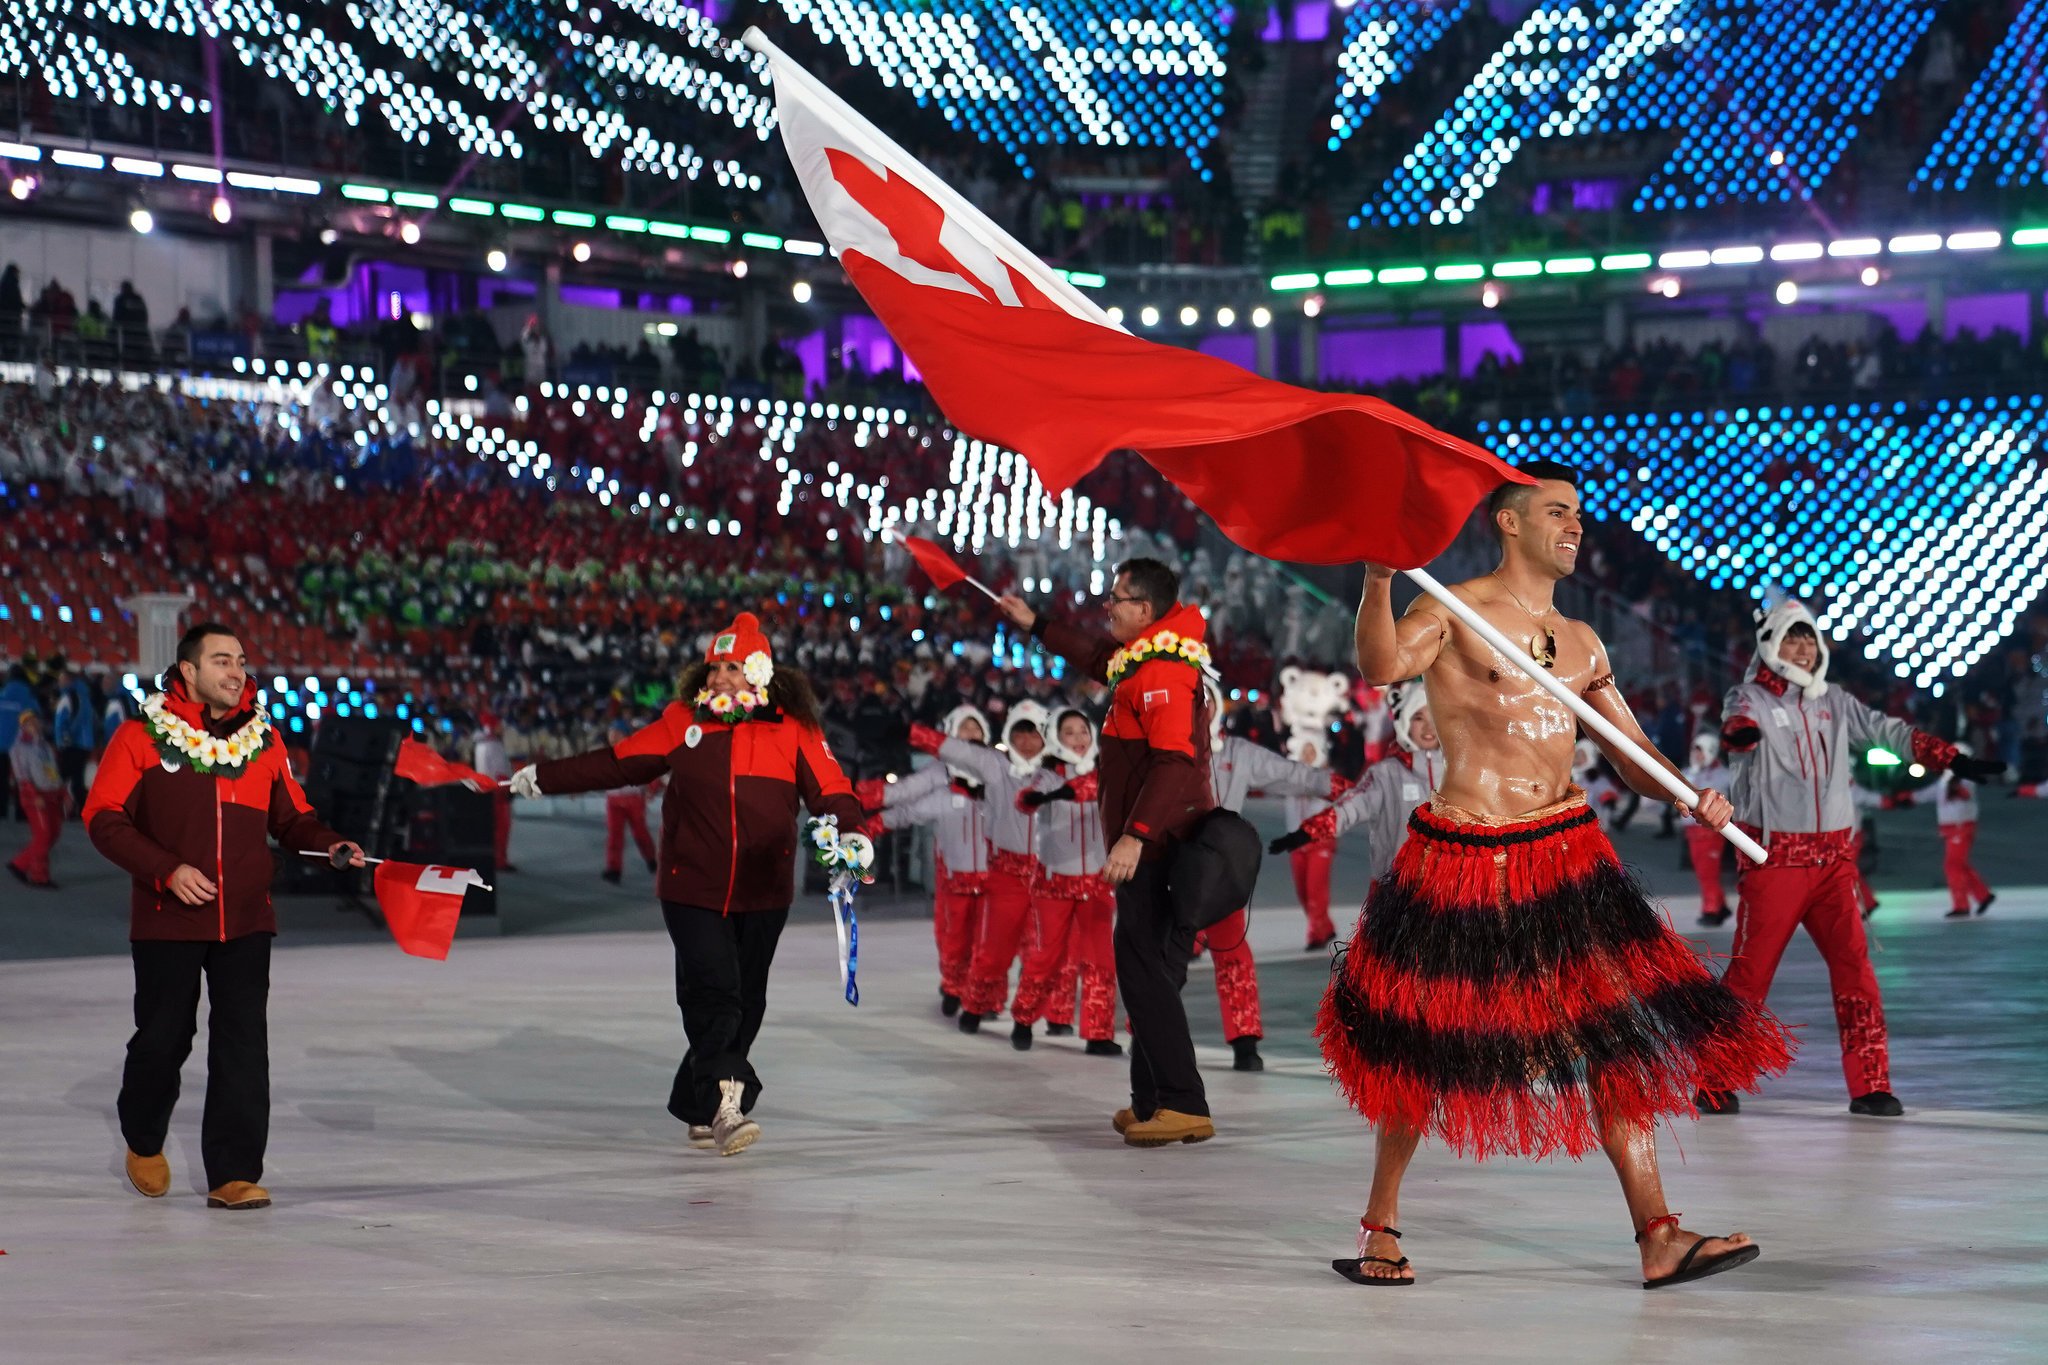 Pita Taufatofua Marched Shirtless with the Flag of Tonga